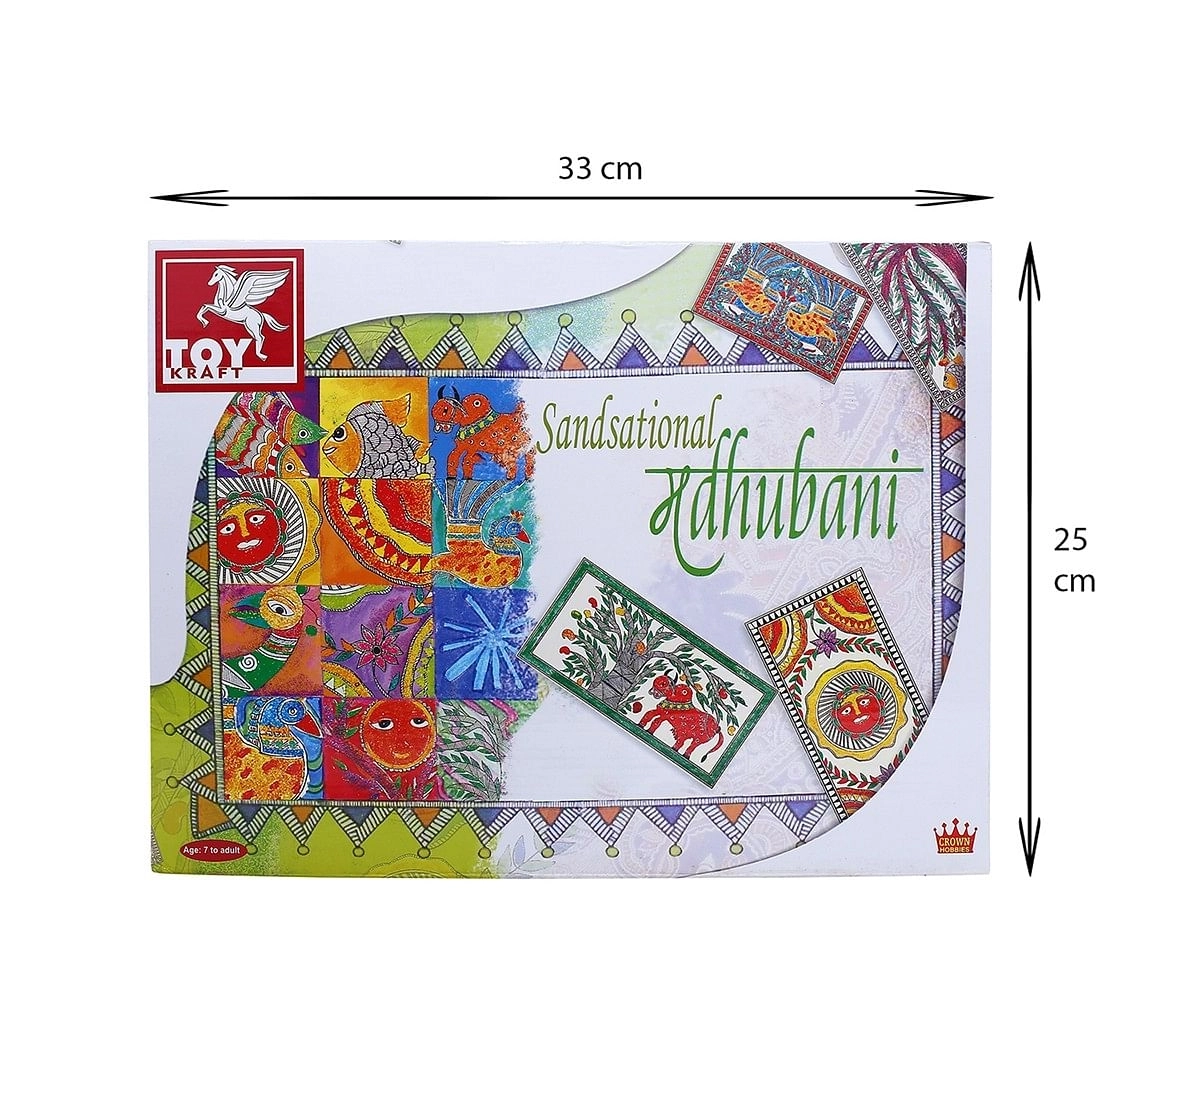 Toy Kraft Sandsational Madhubani DIY Art & Craft Kits for Kids age 7Y+ 